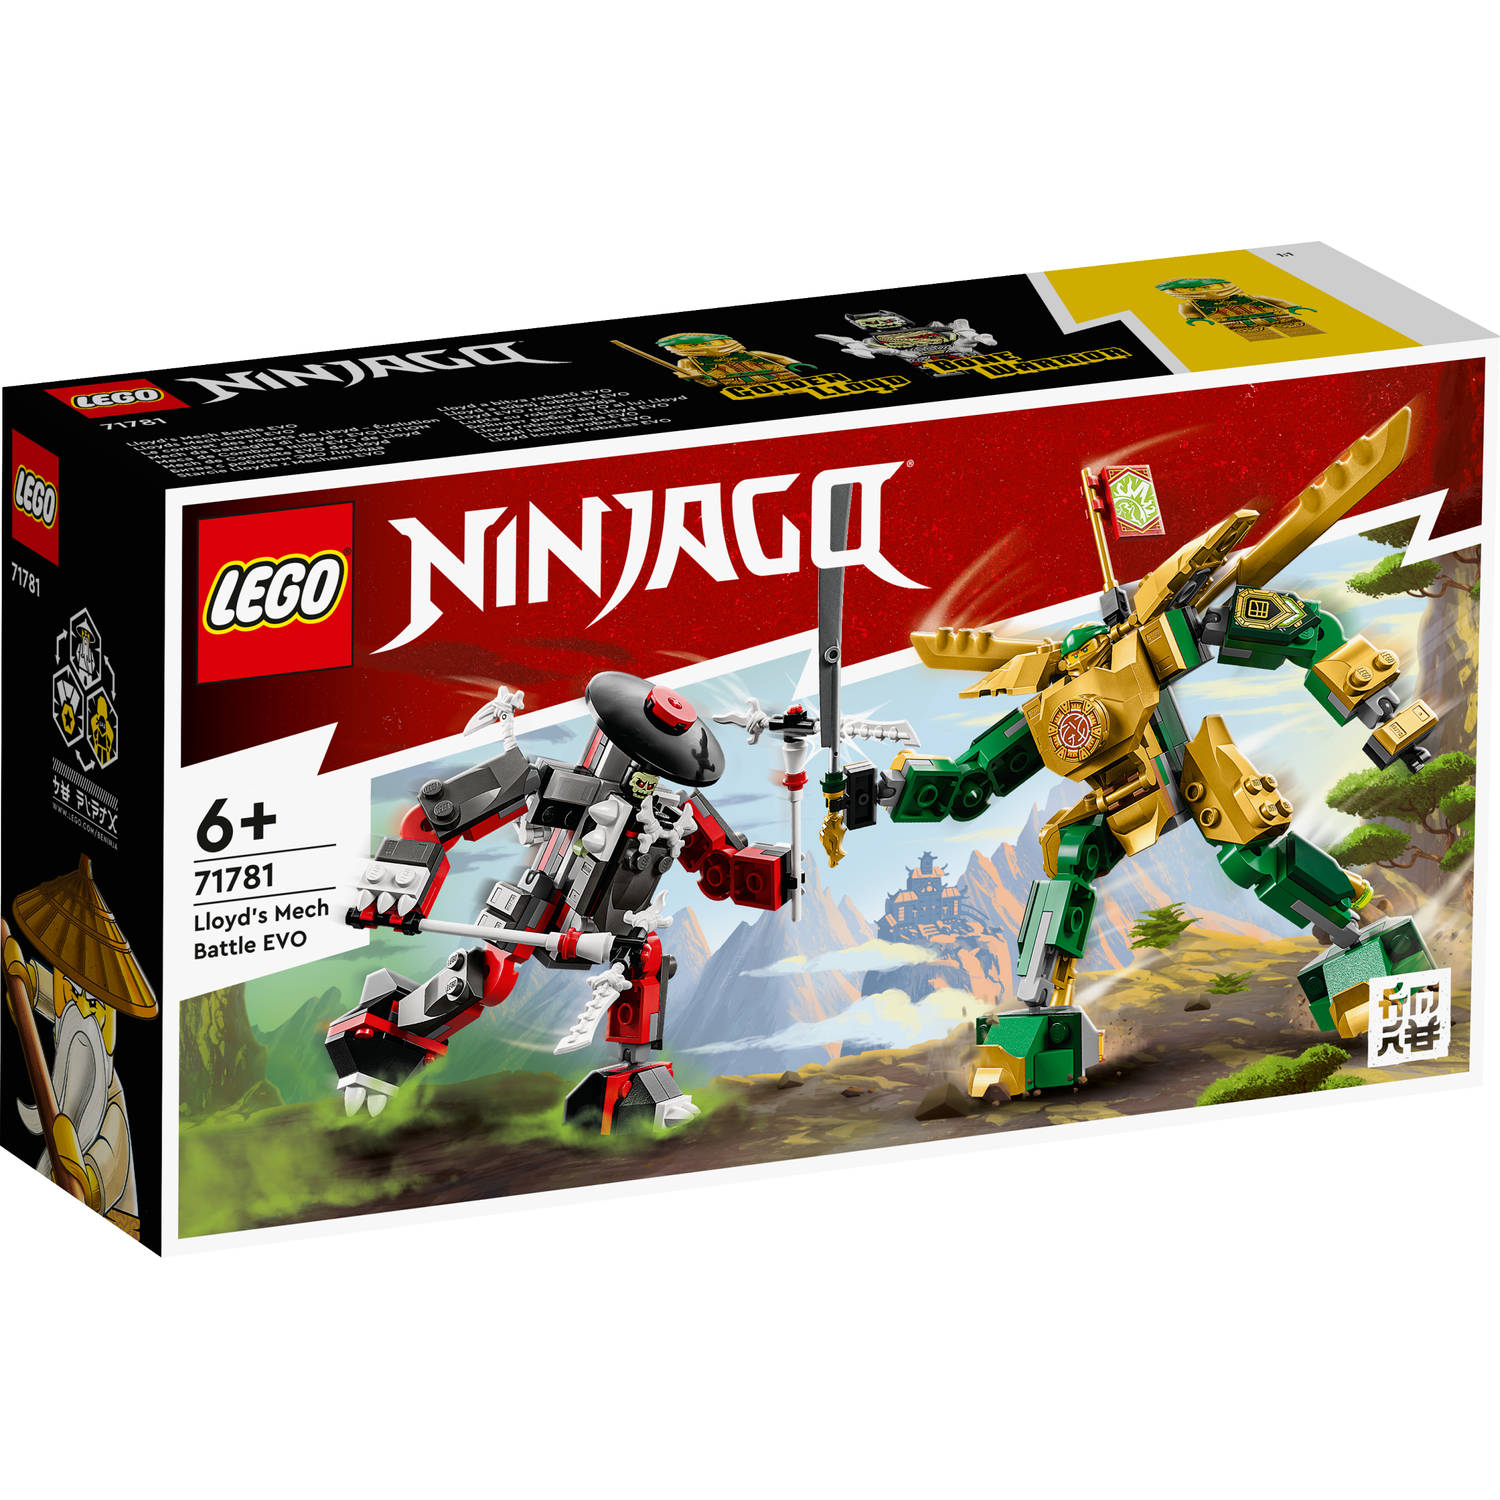 Lego Ninjago Lloyd's Mech Battle Evo 71781